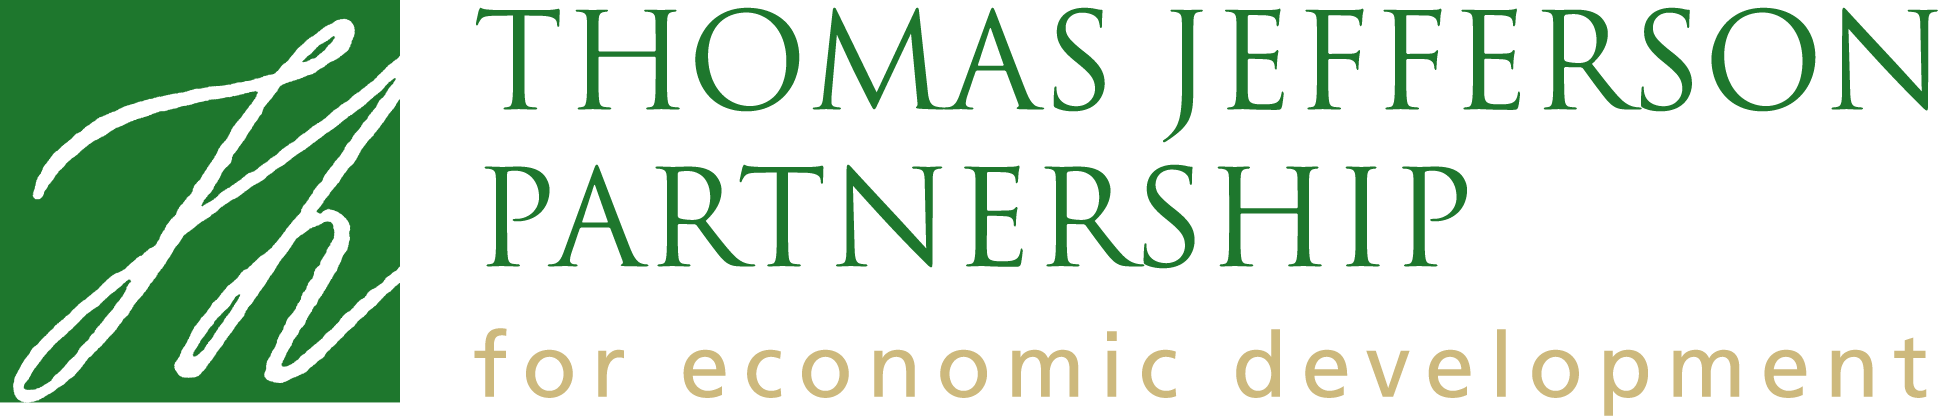 Former logo for Thomas Jefferson Partnership for Economic Development